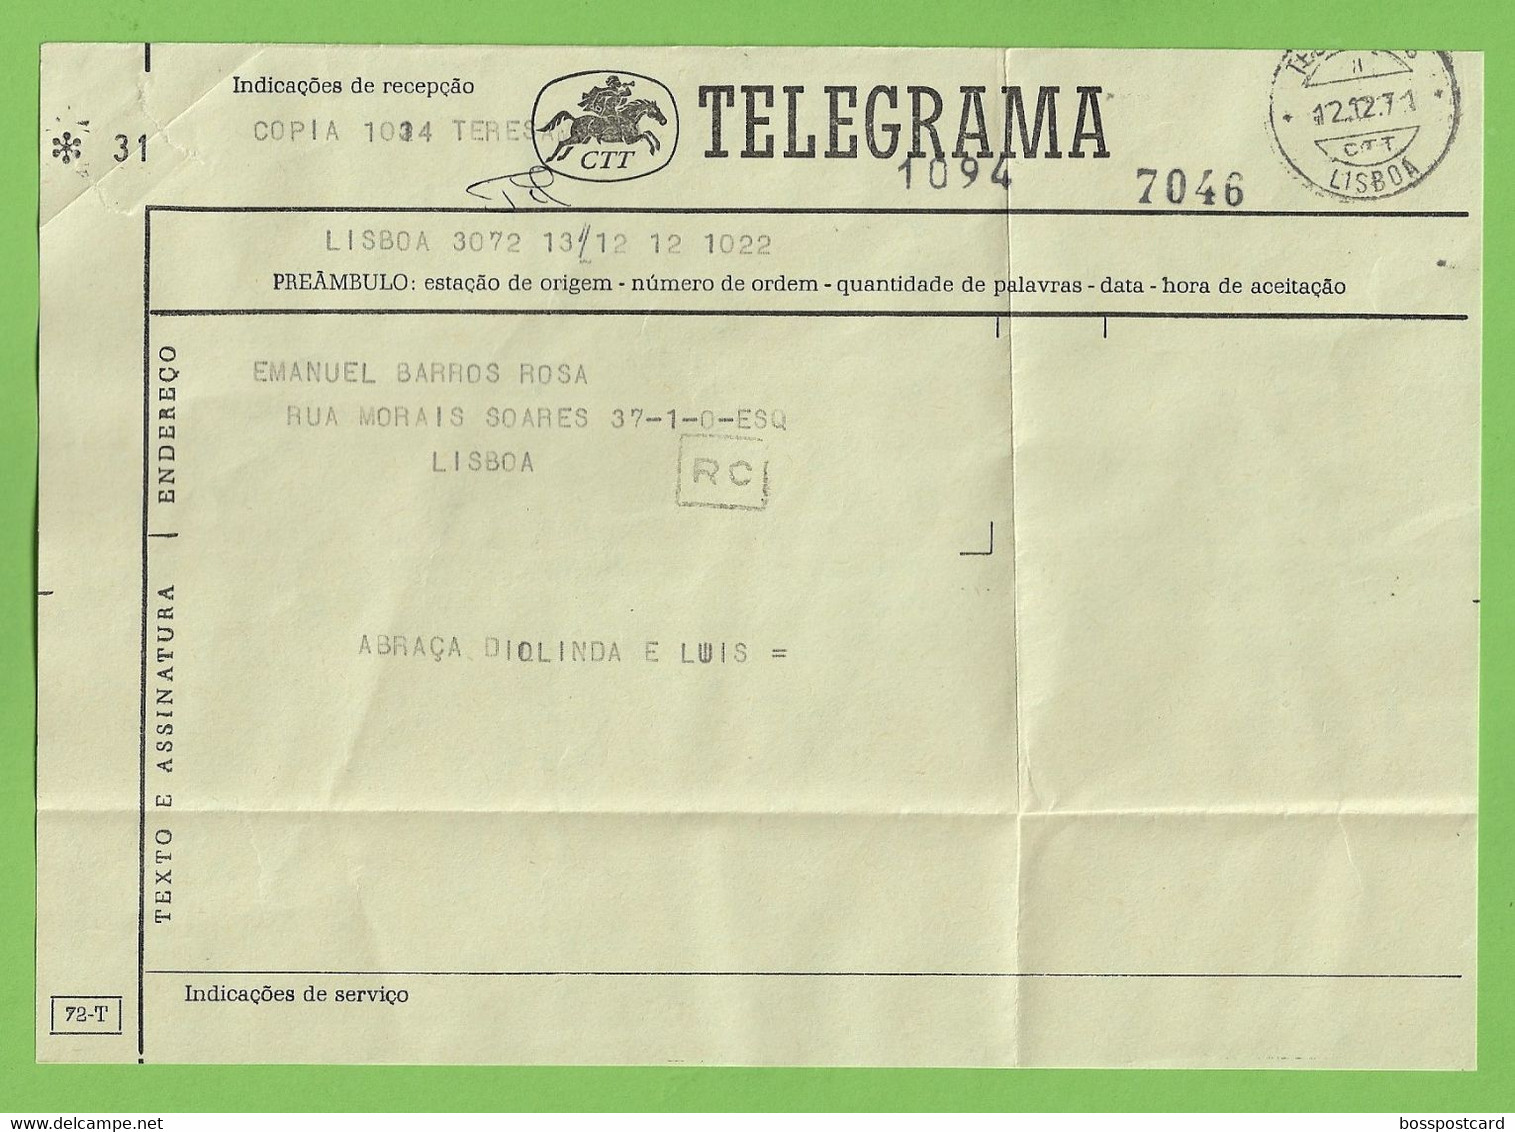 História Postal - Filatelia - Telegrama - CTT - Correios - Telegram - Cover - Letter - Philately - Portugal - Storia Postale